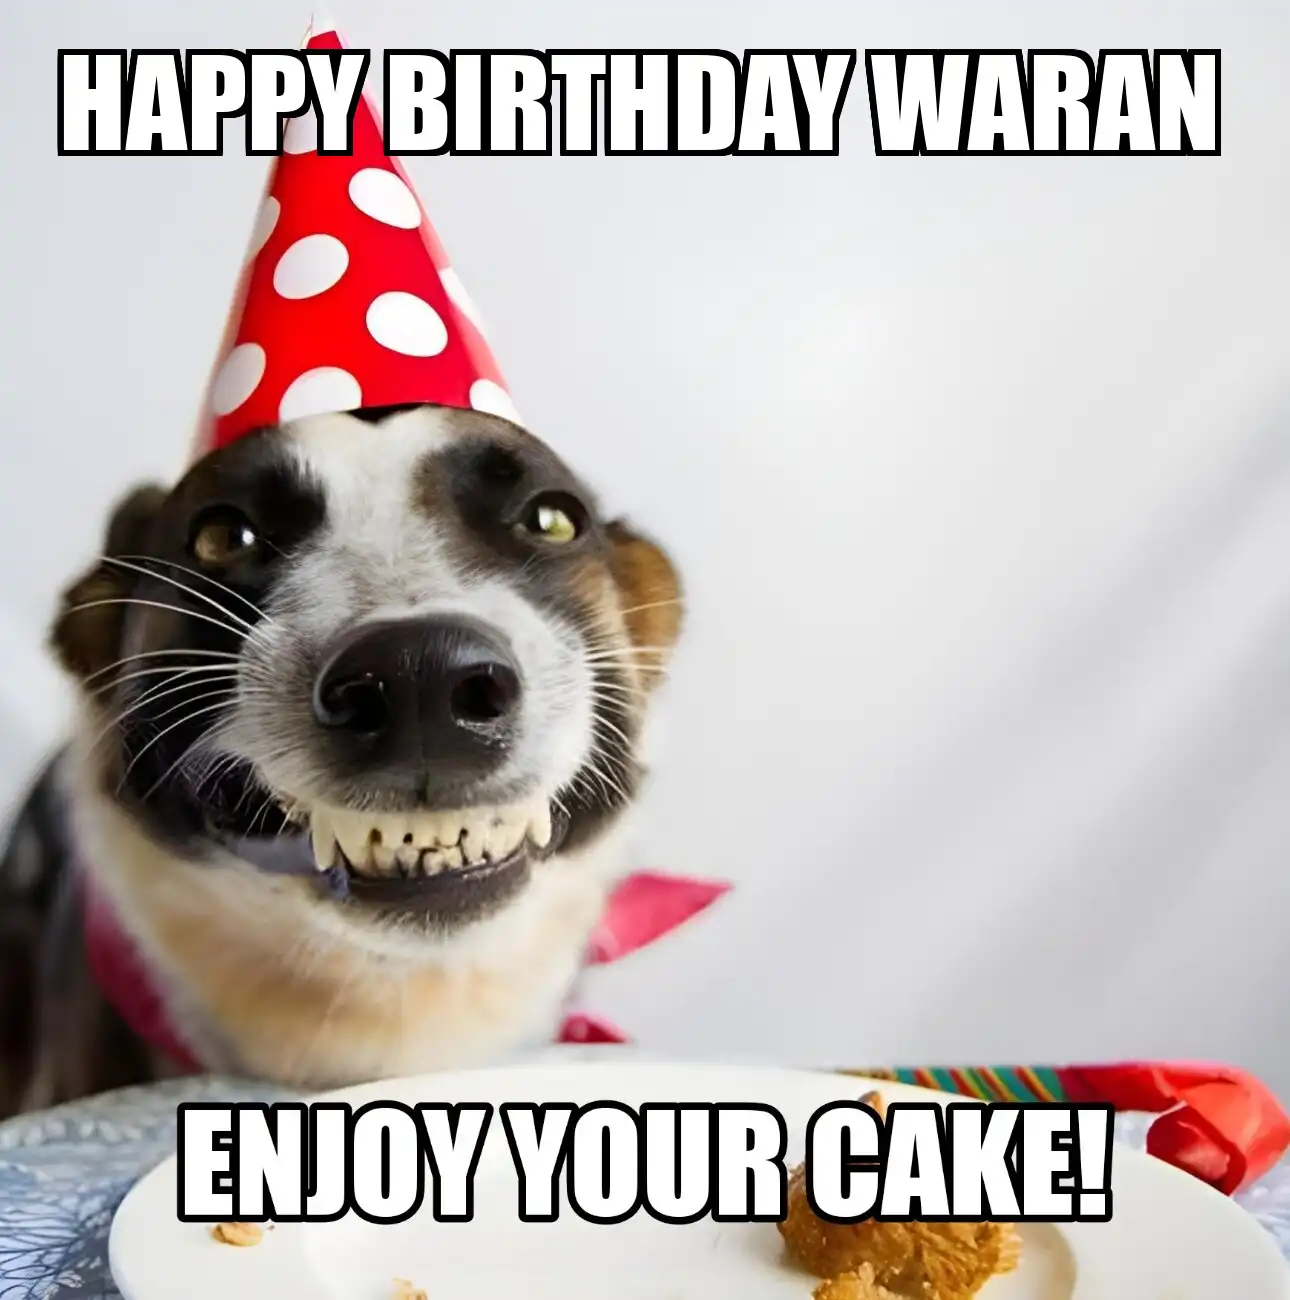 Happy Birthday Waran Enjoy Your Cake Dog Meme